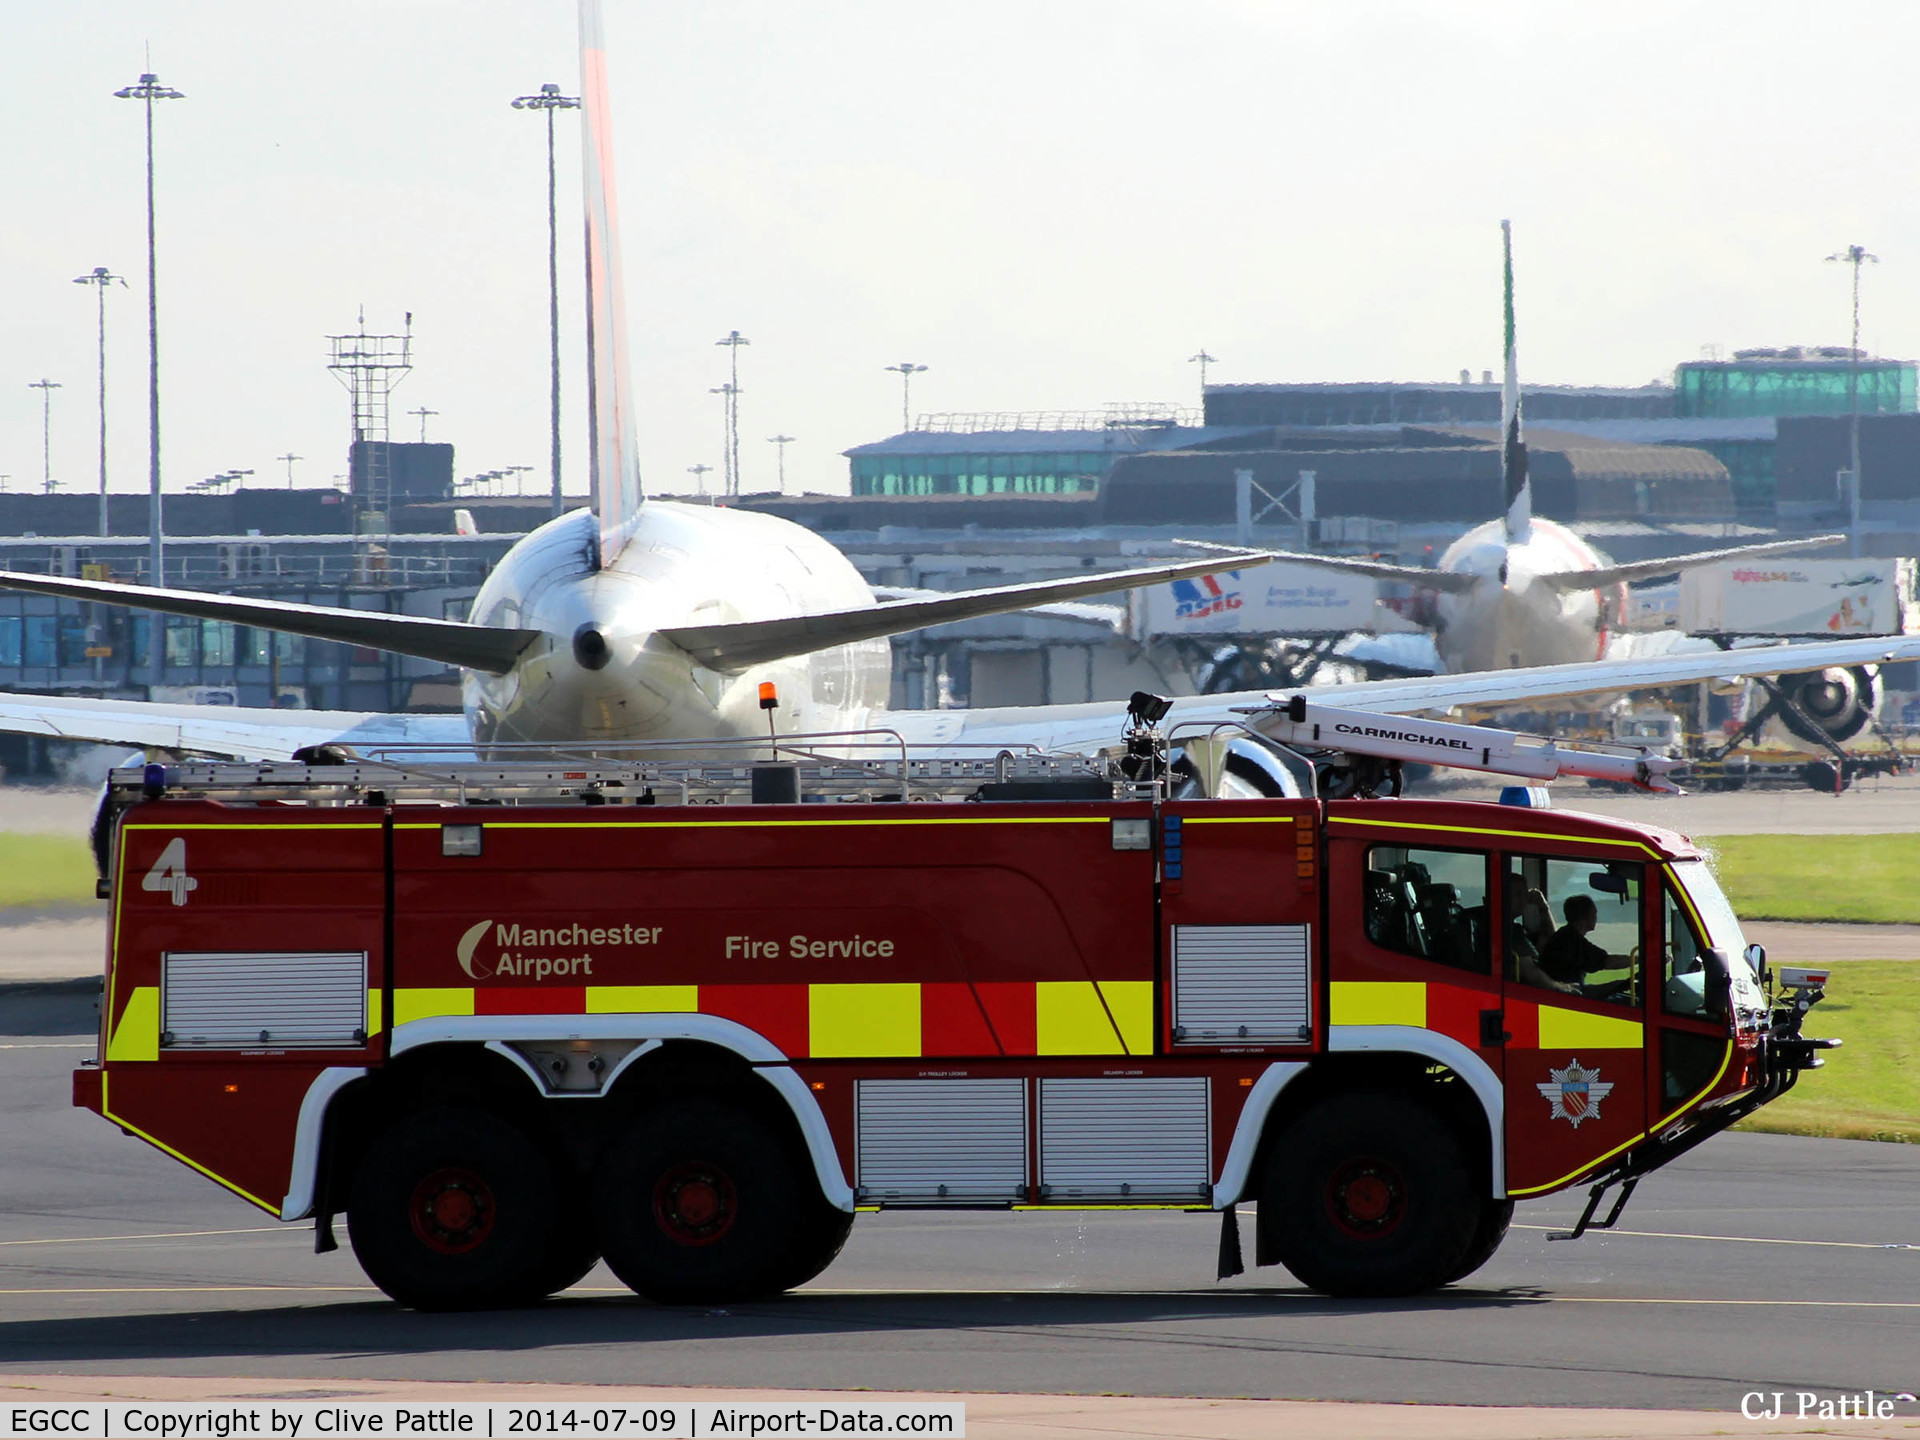 Manchester Airport, Manchester, England United Kingdom (EGCC) - Fire Tender on patrol at Manchester EGCC